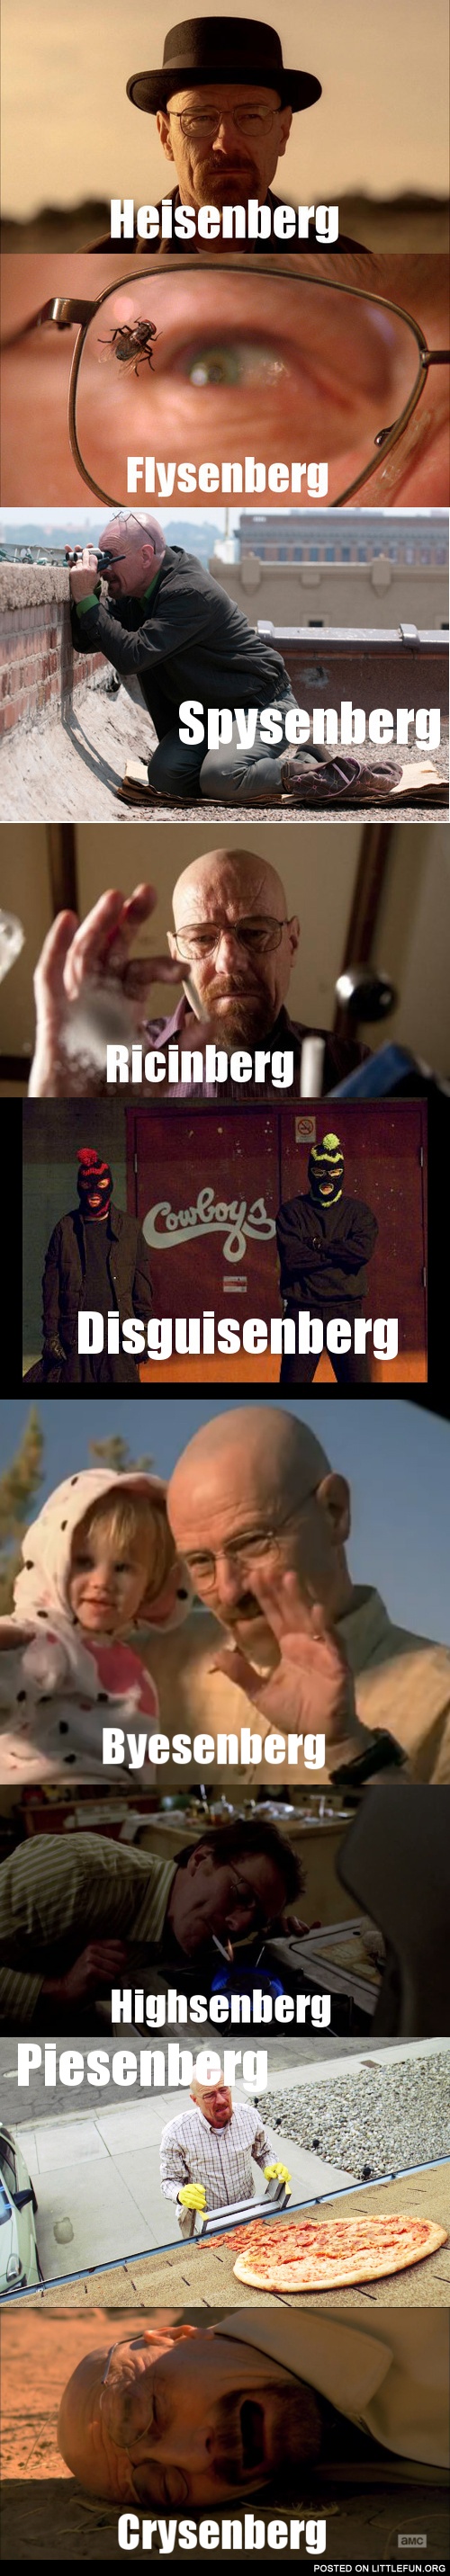 Heisenberg Crysenberg